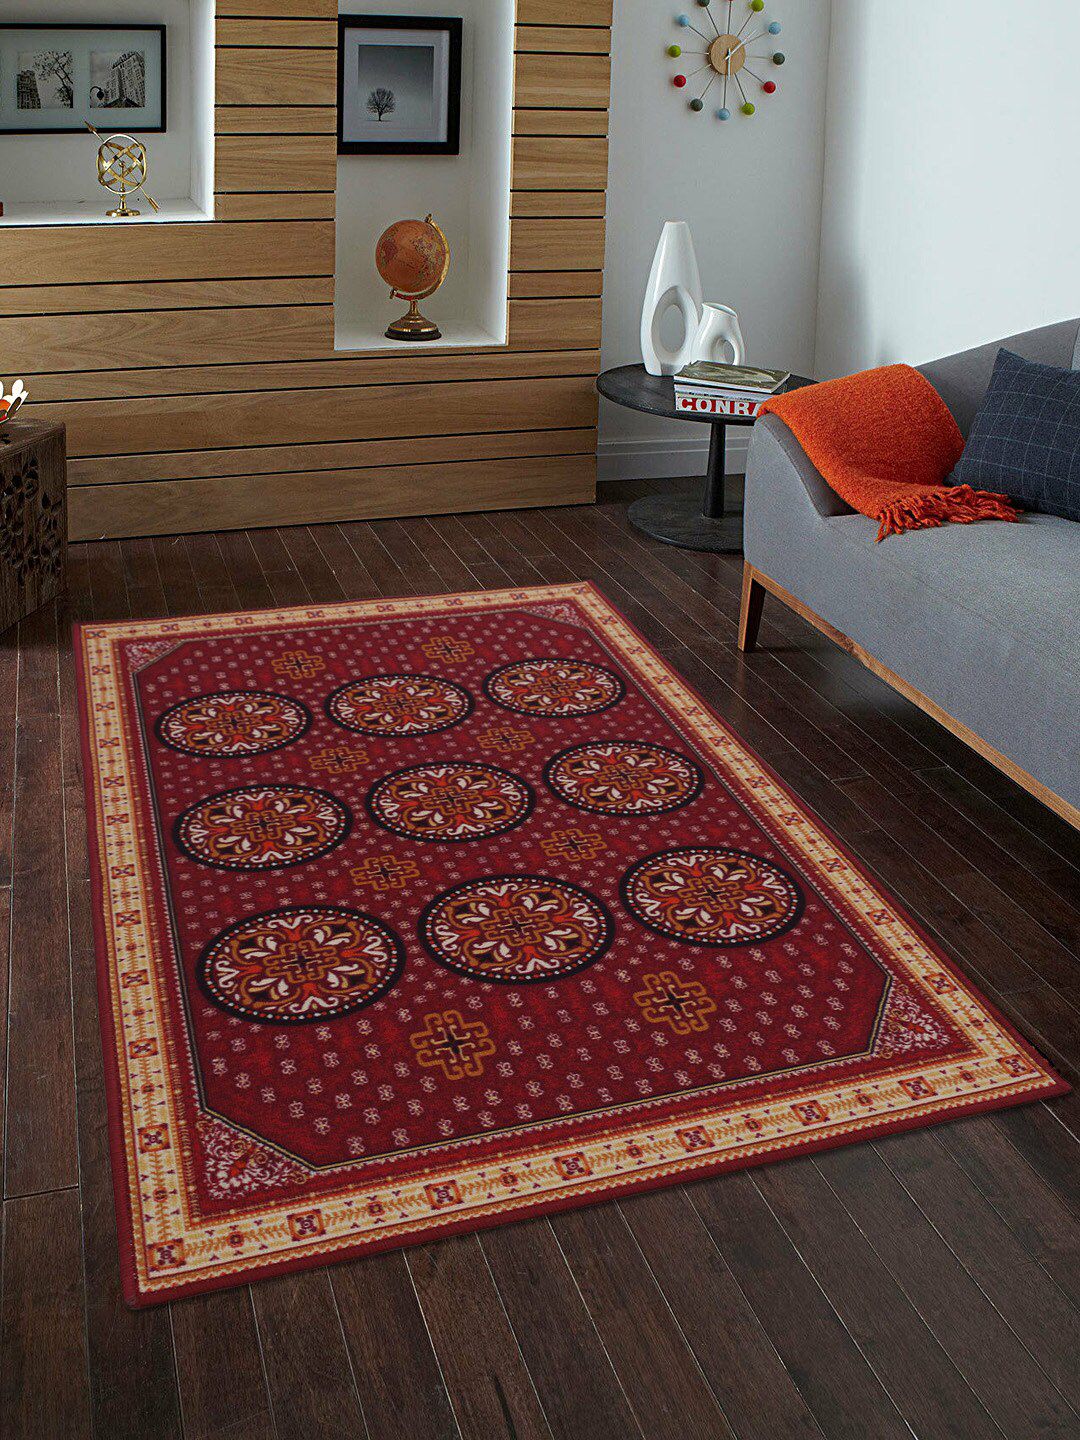 RUGSMITH Red & Brown Printed Anti-Skid Carpet Price in India